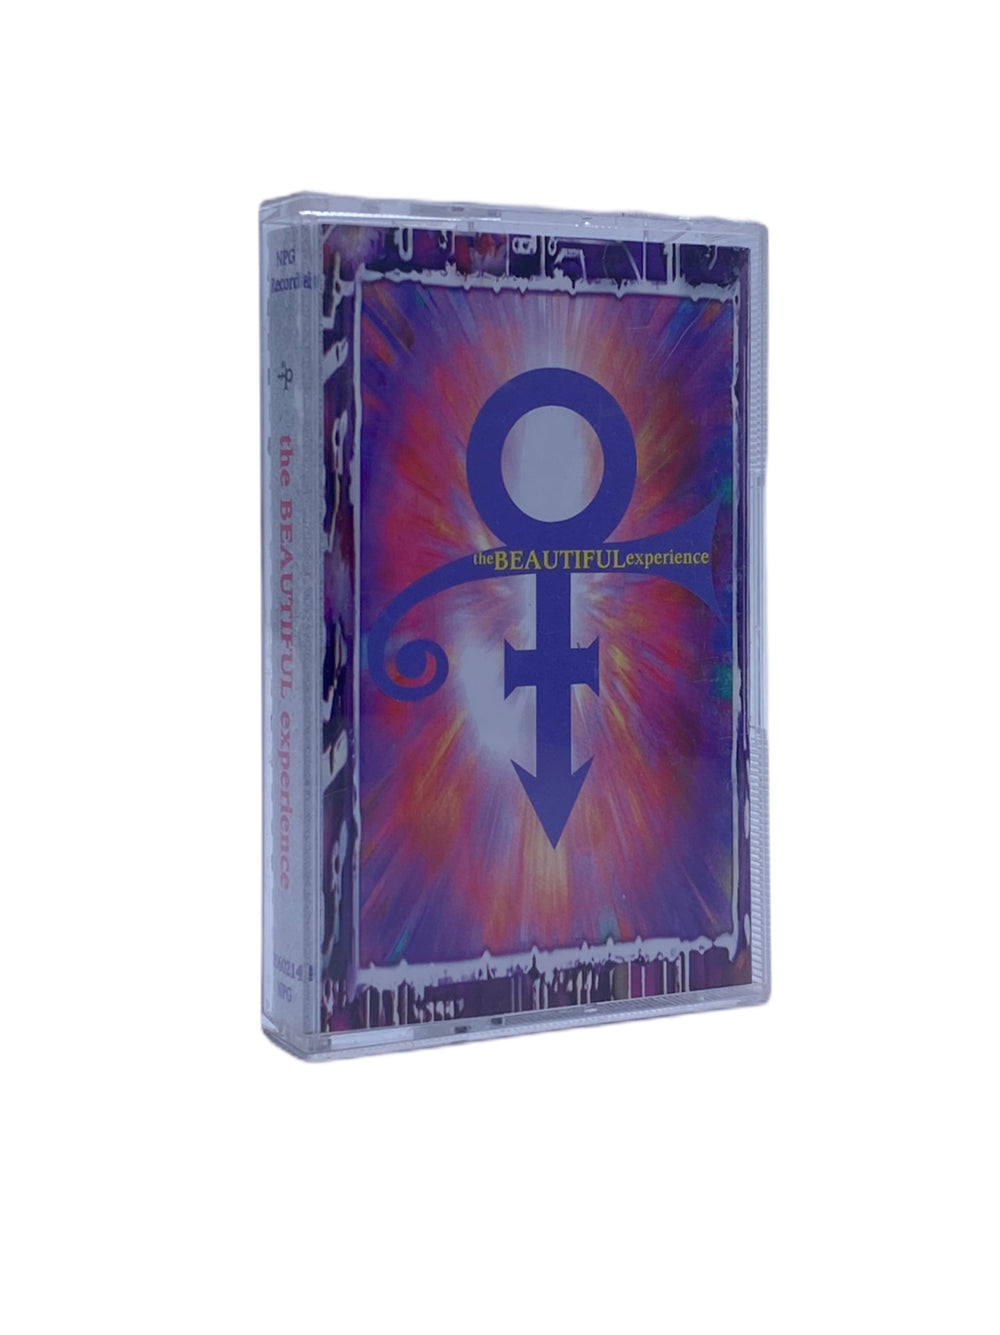 Prince – 0(+>The Beautiful Experience 1994 Original Cassette Tape 7 Tracks O(+>